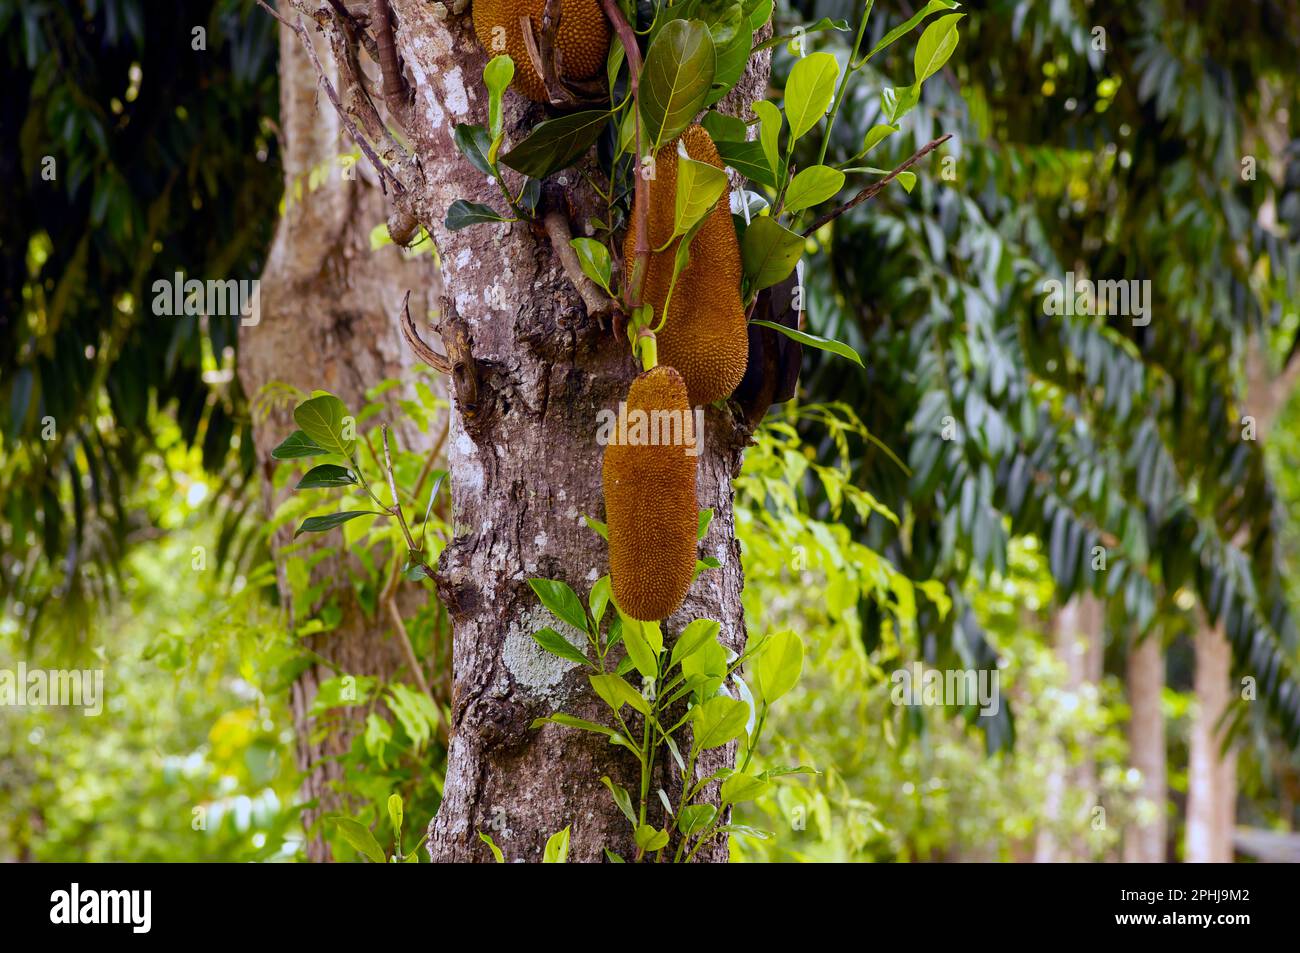 Nangka, Jack fruit (Artocarpus heterophyllus) on the tree, in shallow focus Stock Photo